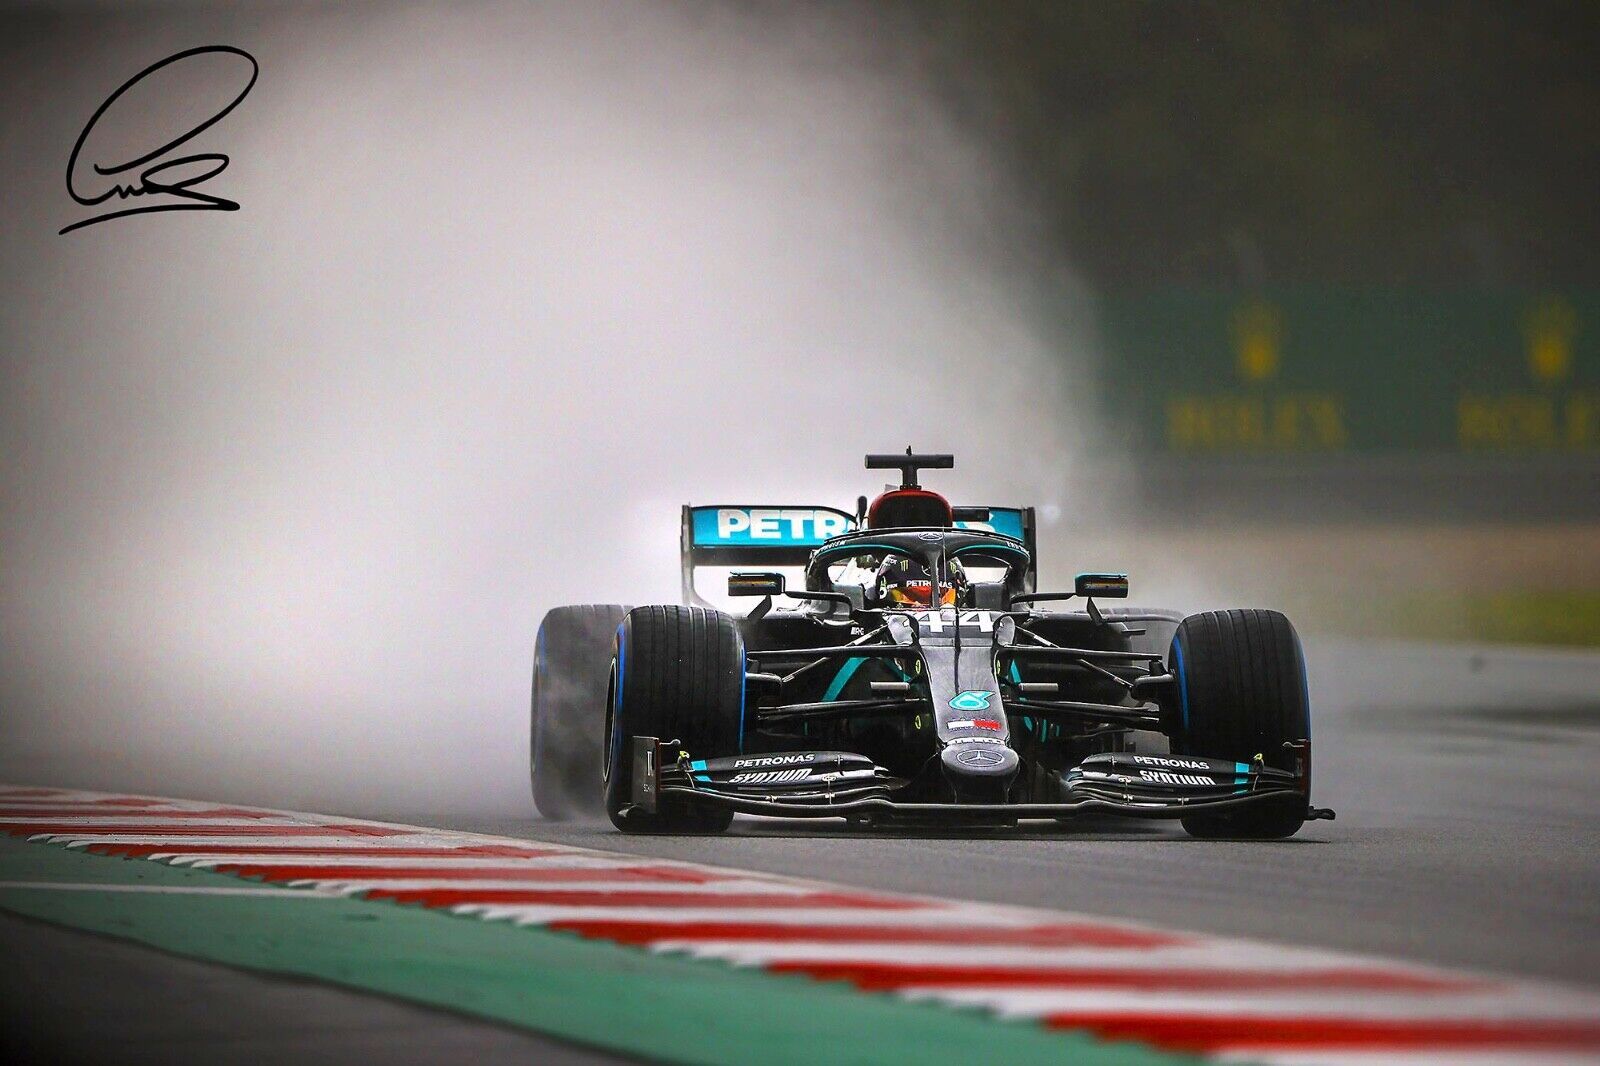 Lewis Hamilton in his Mercedes on a wet track - Lewis Hamilton